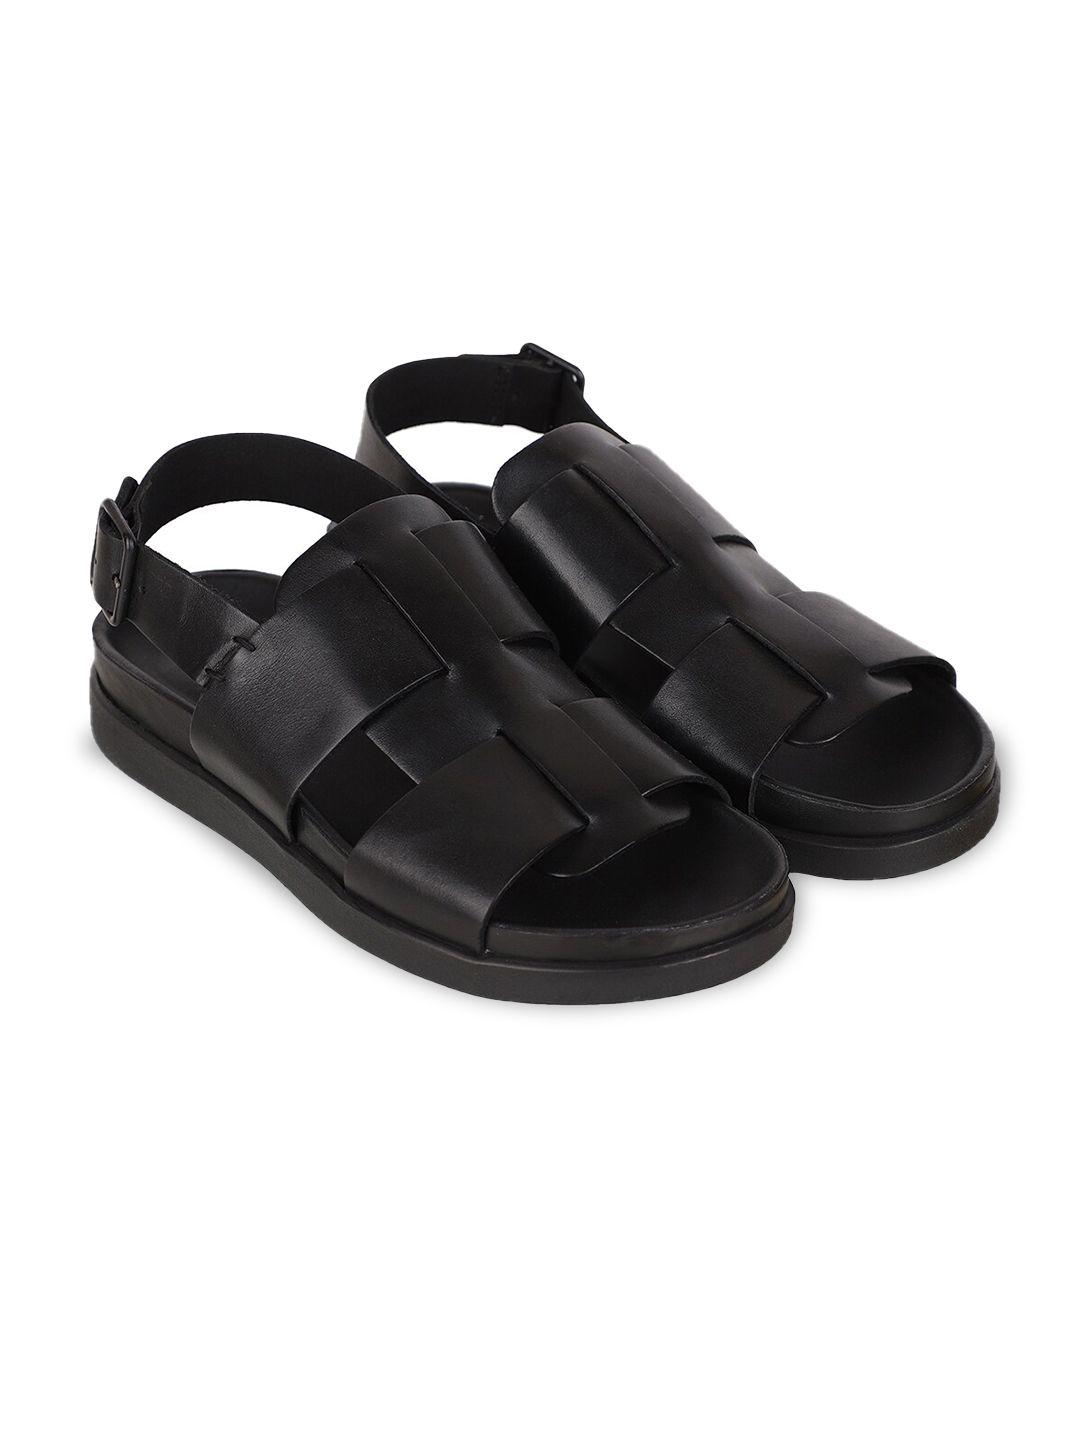 clarks men black leather comfort sandals